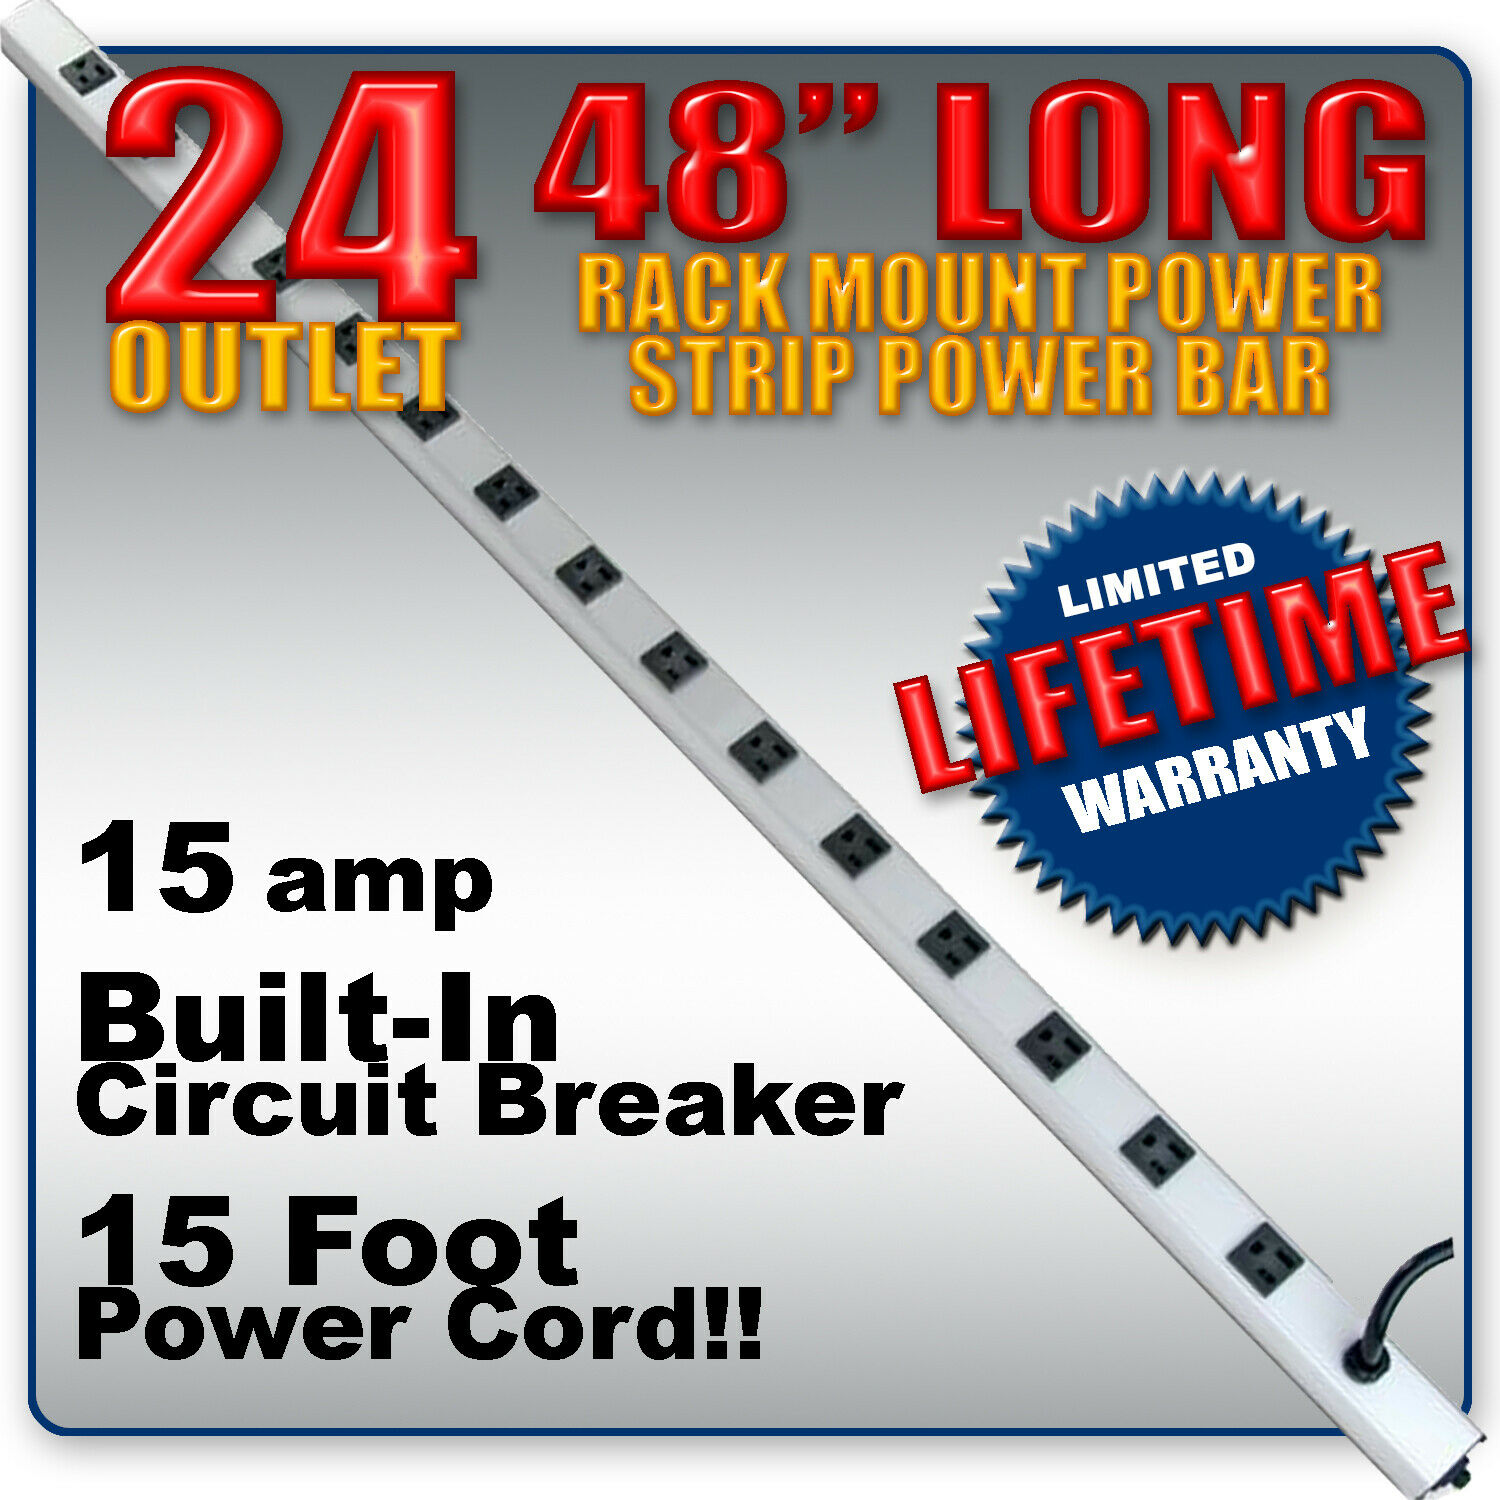 24 OUTLET 48 inch LONG  RACK MOUNT POWER STRIP POWERBAR PDU - LIFETIME WARRANTY